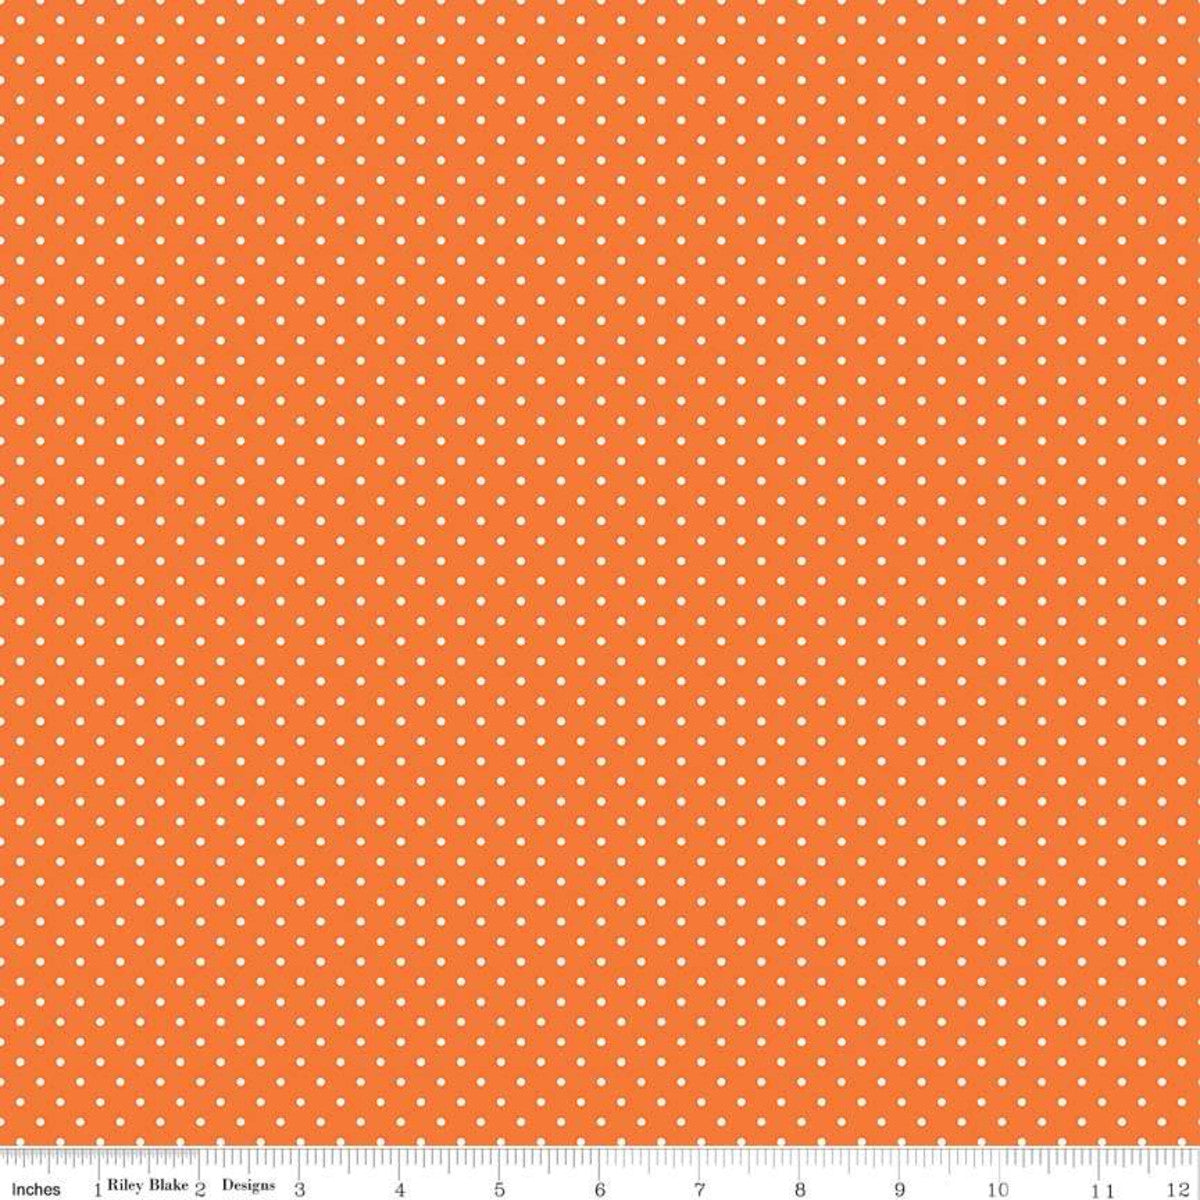 White Swiss (Polka) Dots - Orange Background Fabric, 100% Cotton, Ref. C670-60 ORANGE, Swiss Dots Collection by Riley Blake Designs®